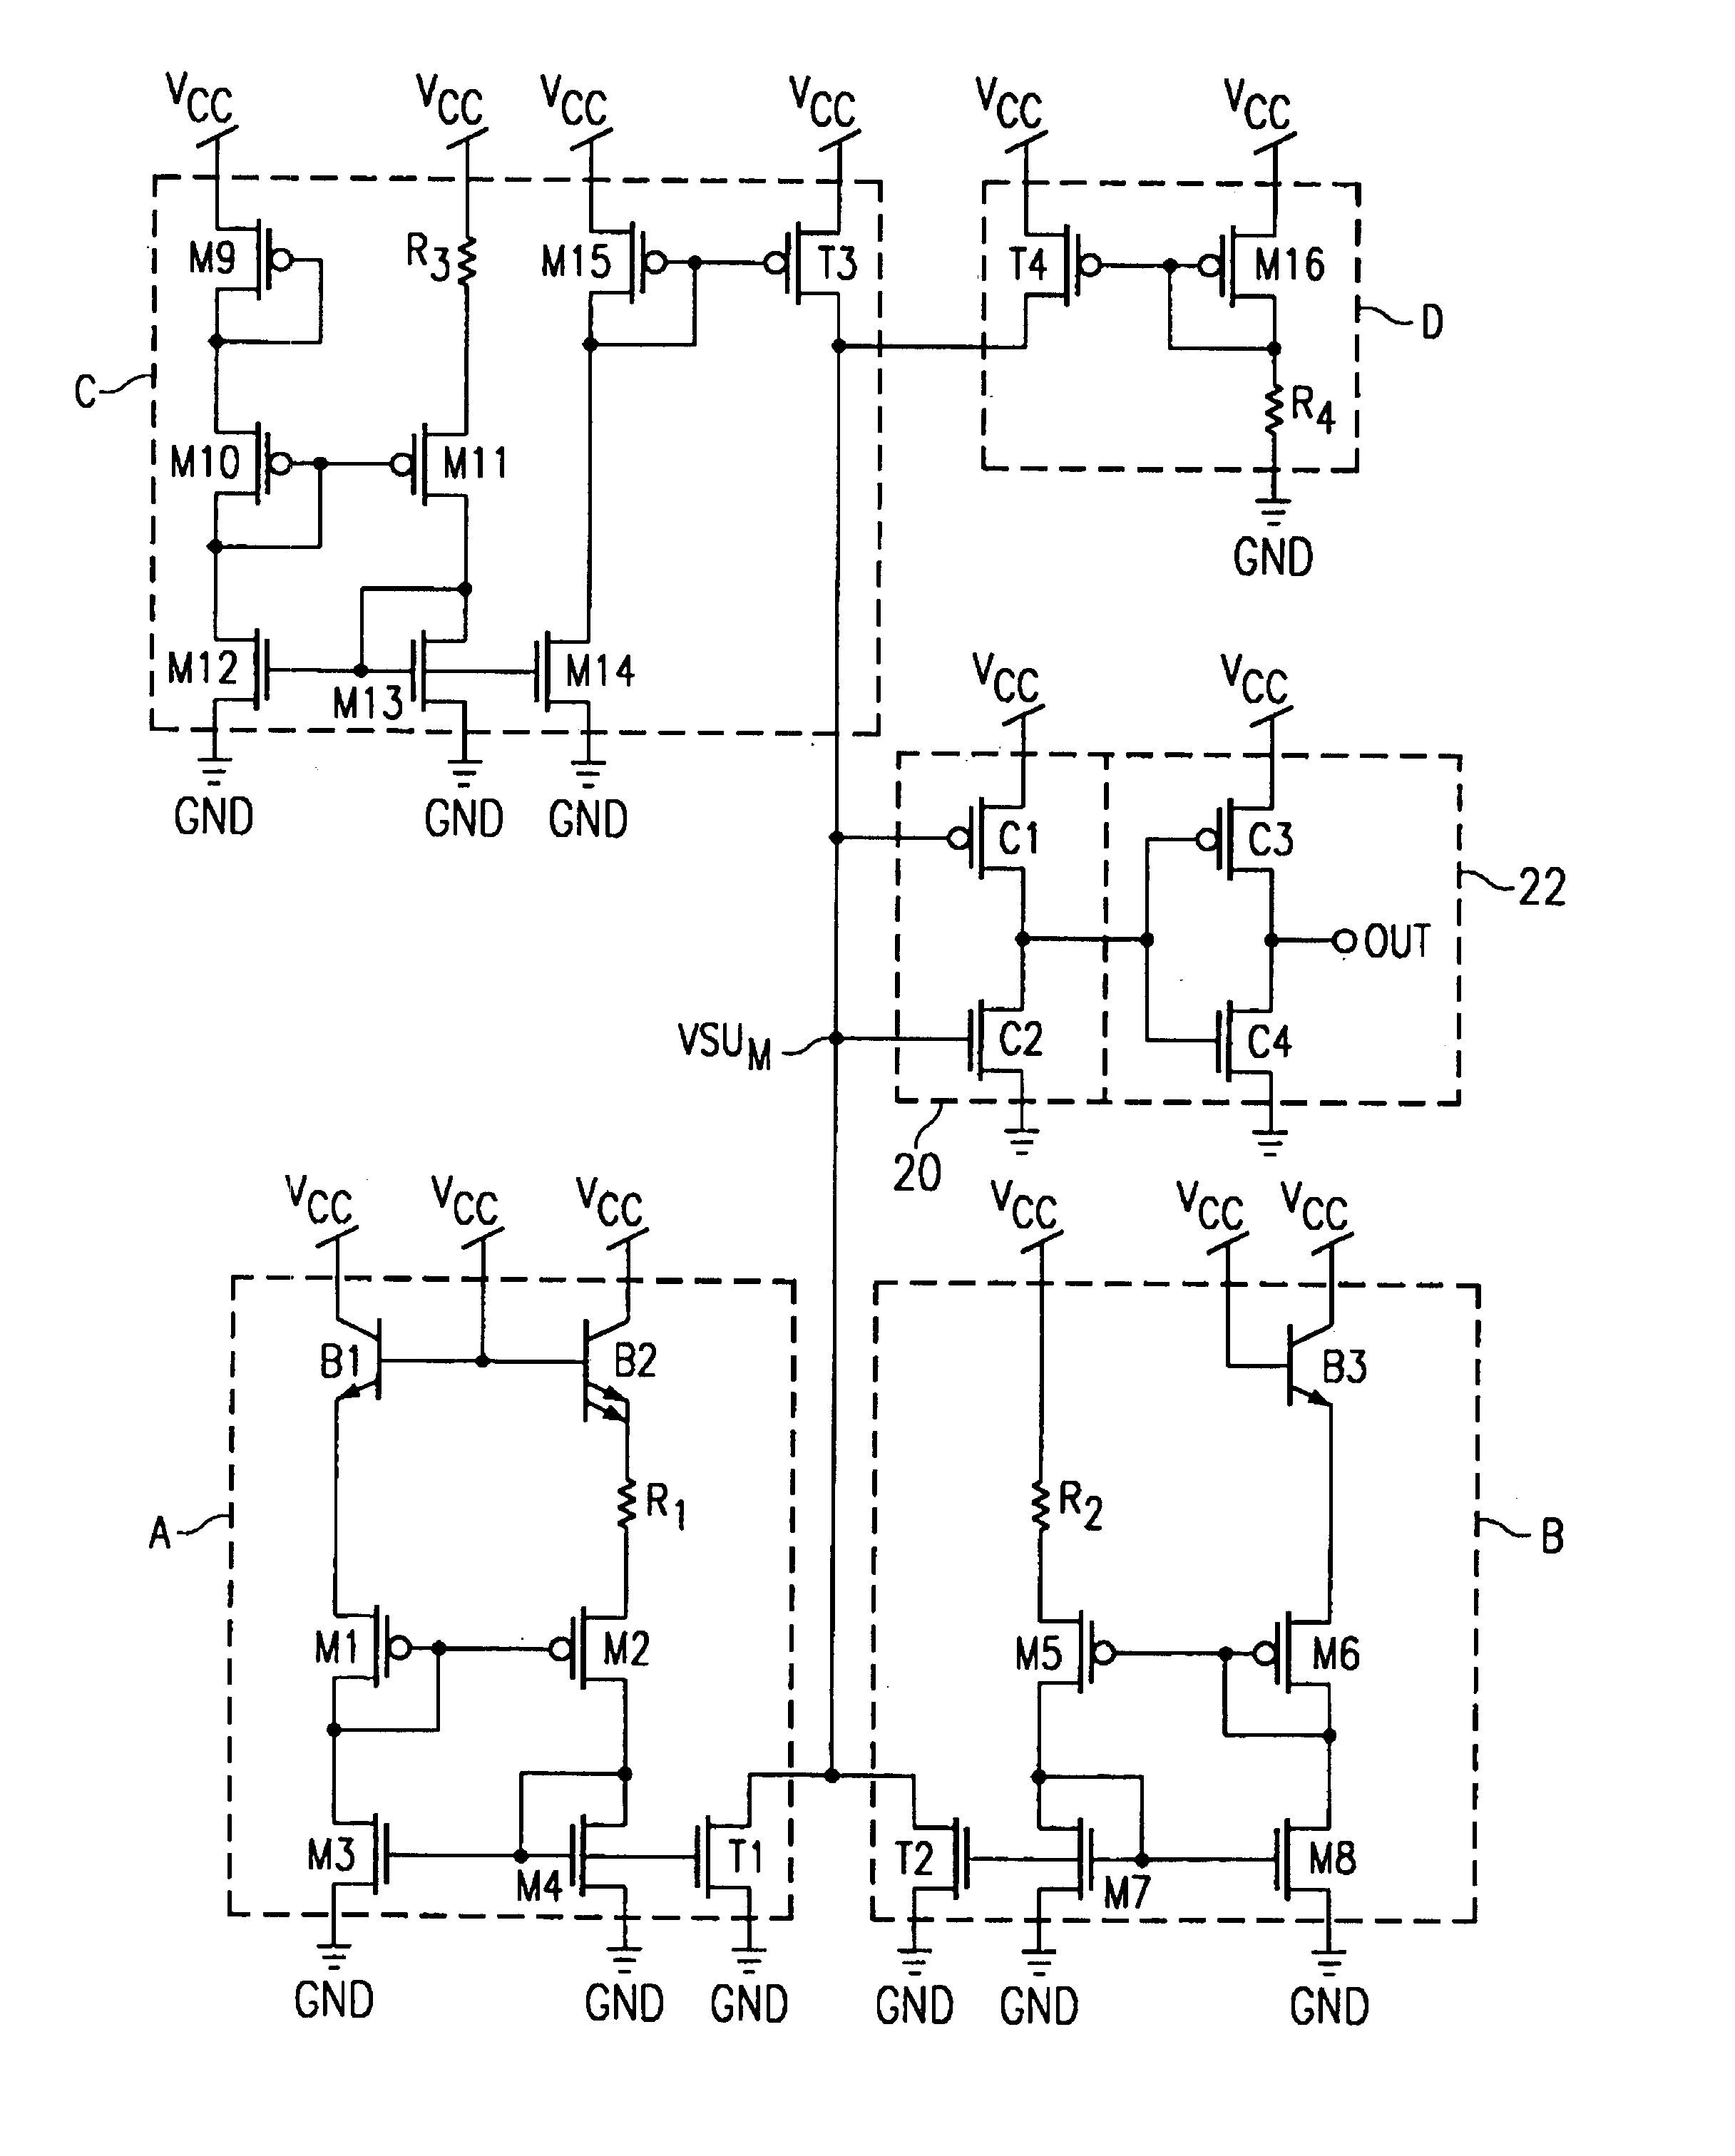 Direct current sum bandgap voltage comparator